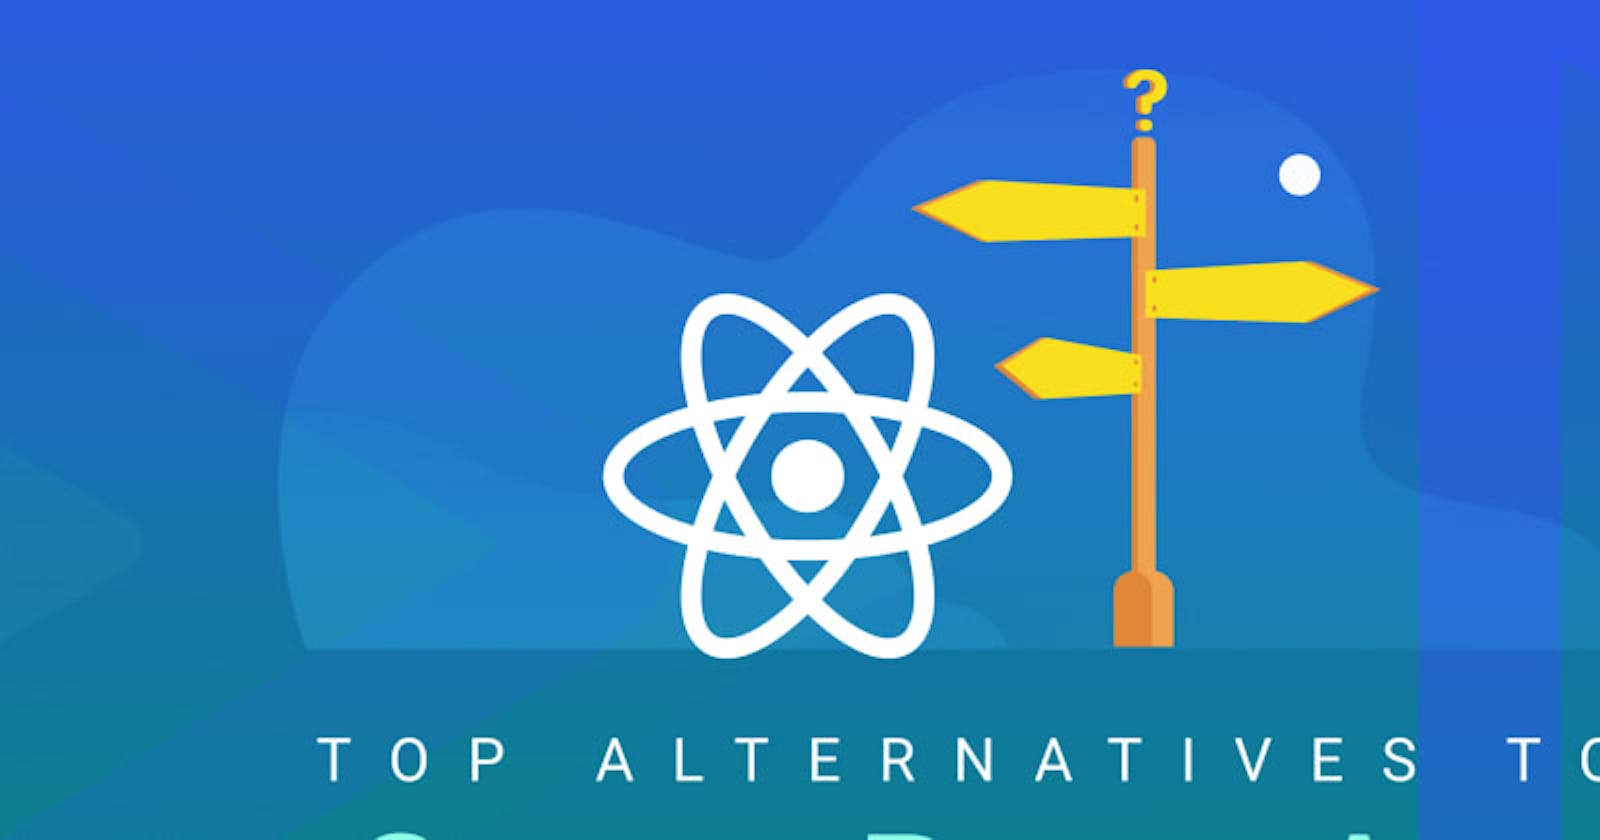 Top alternatives to Create-React-App